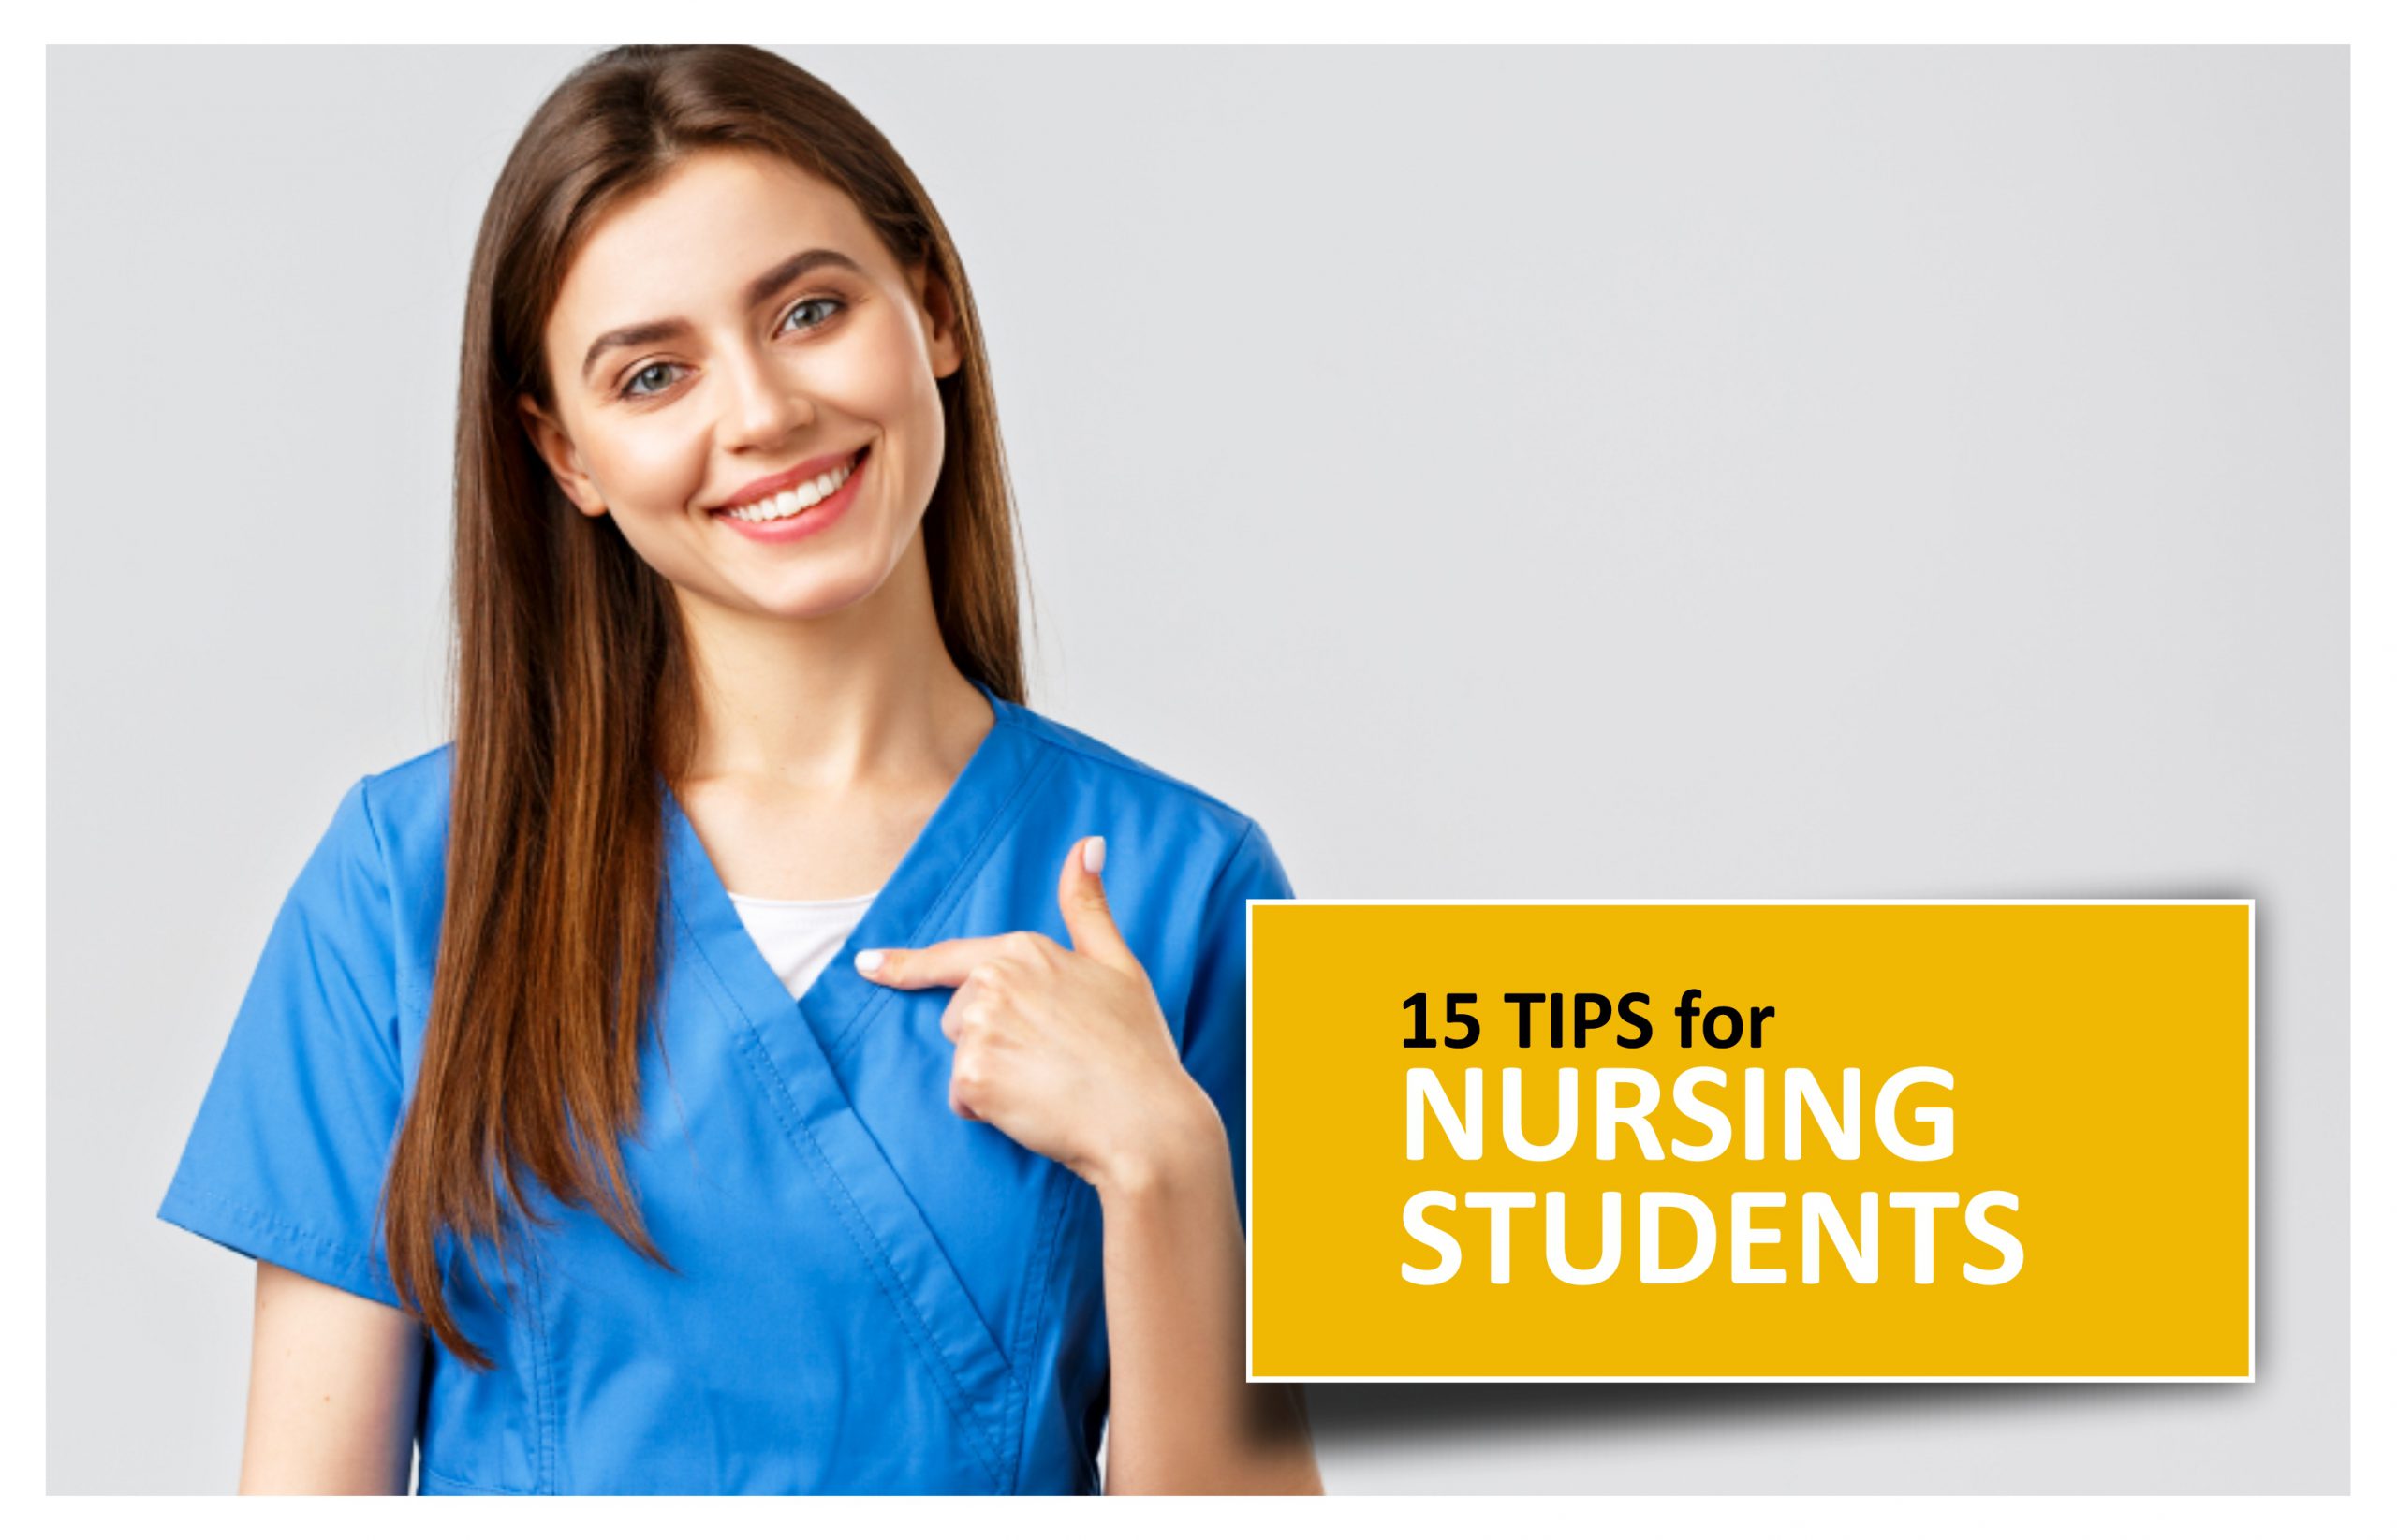 15 TIPS forNURSING STUDENTS